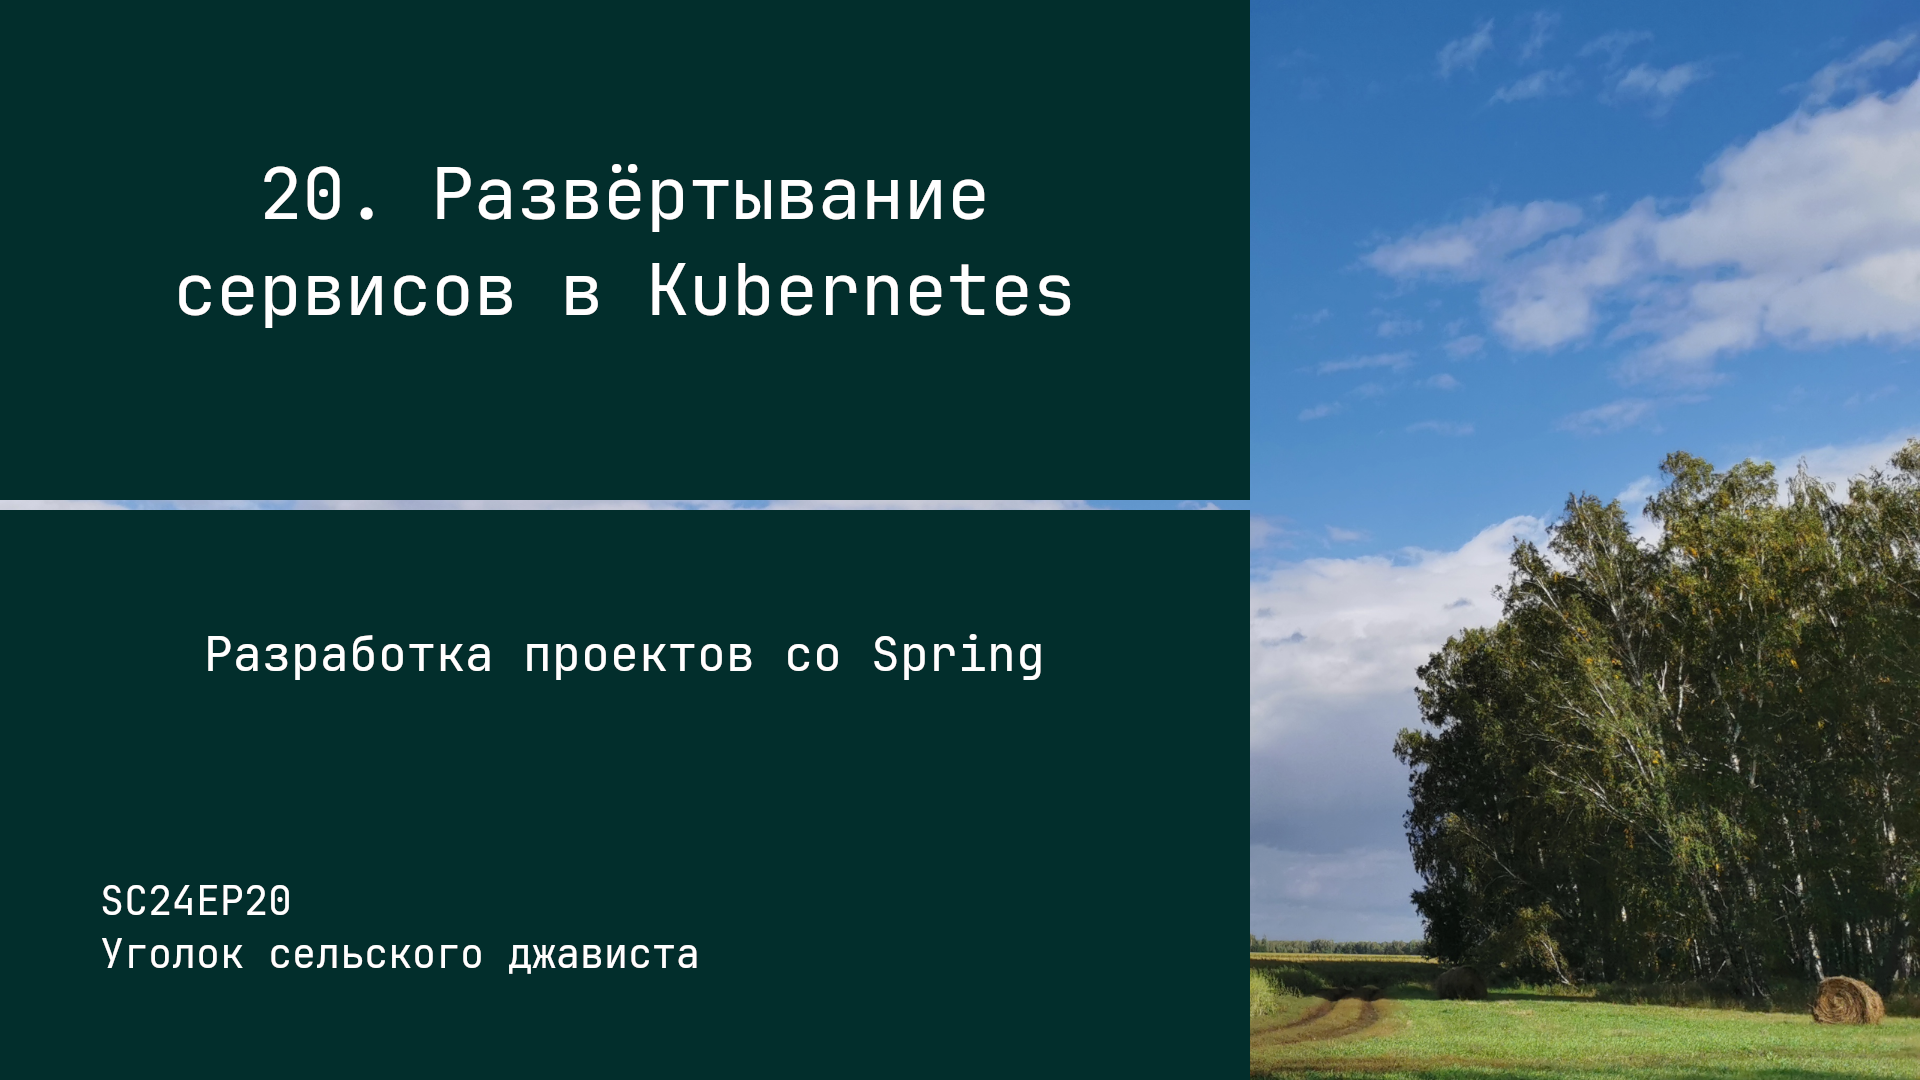 SC24EP20 Развёртывание сервисов в Kubernetes - Разработка проектов со Spring